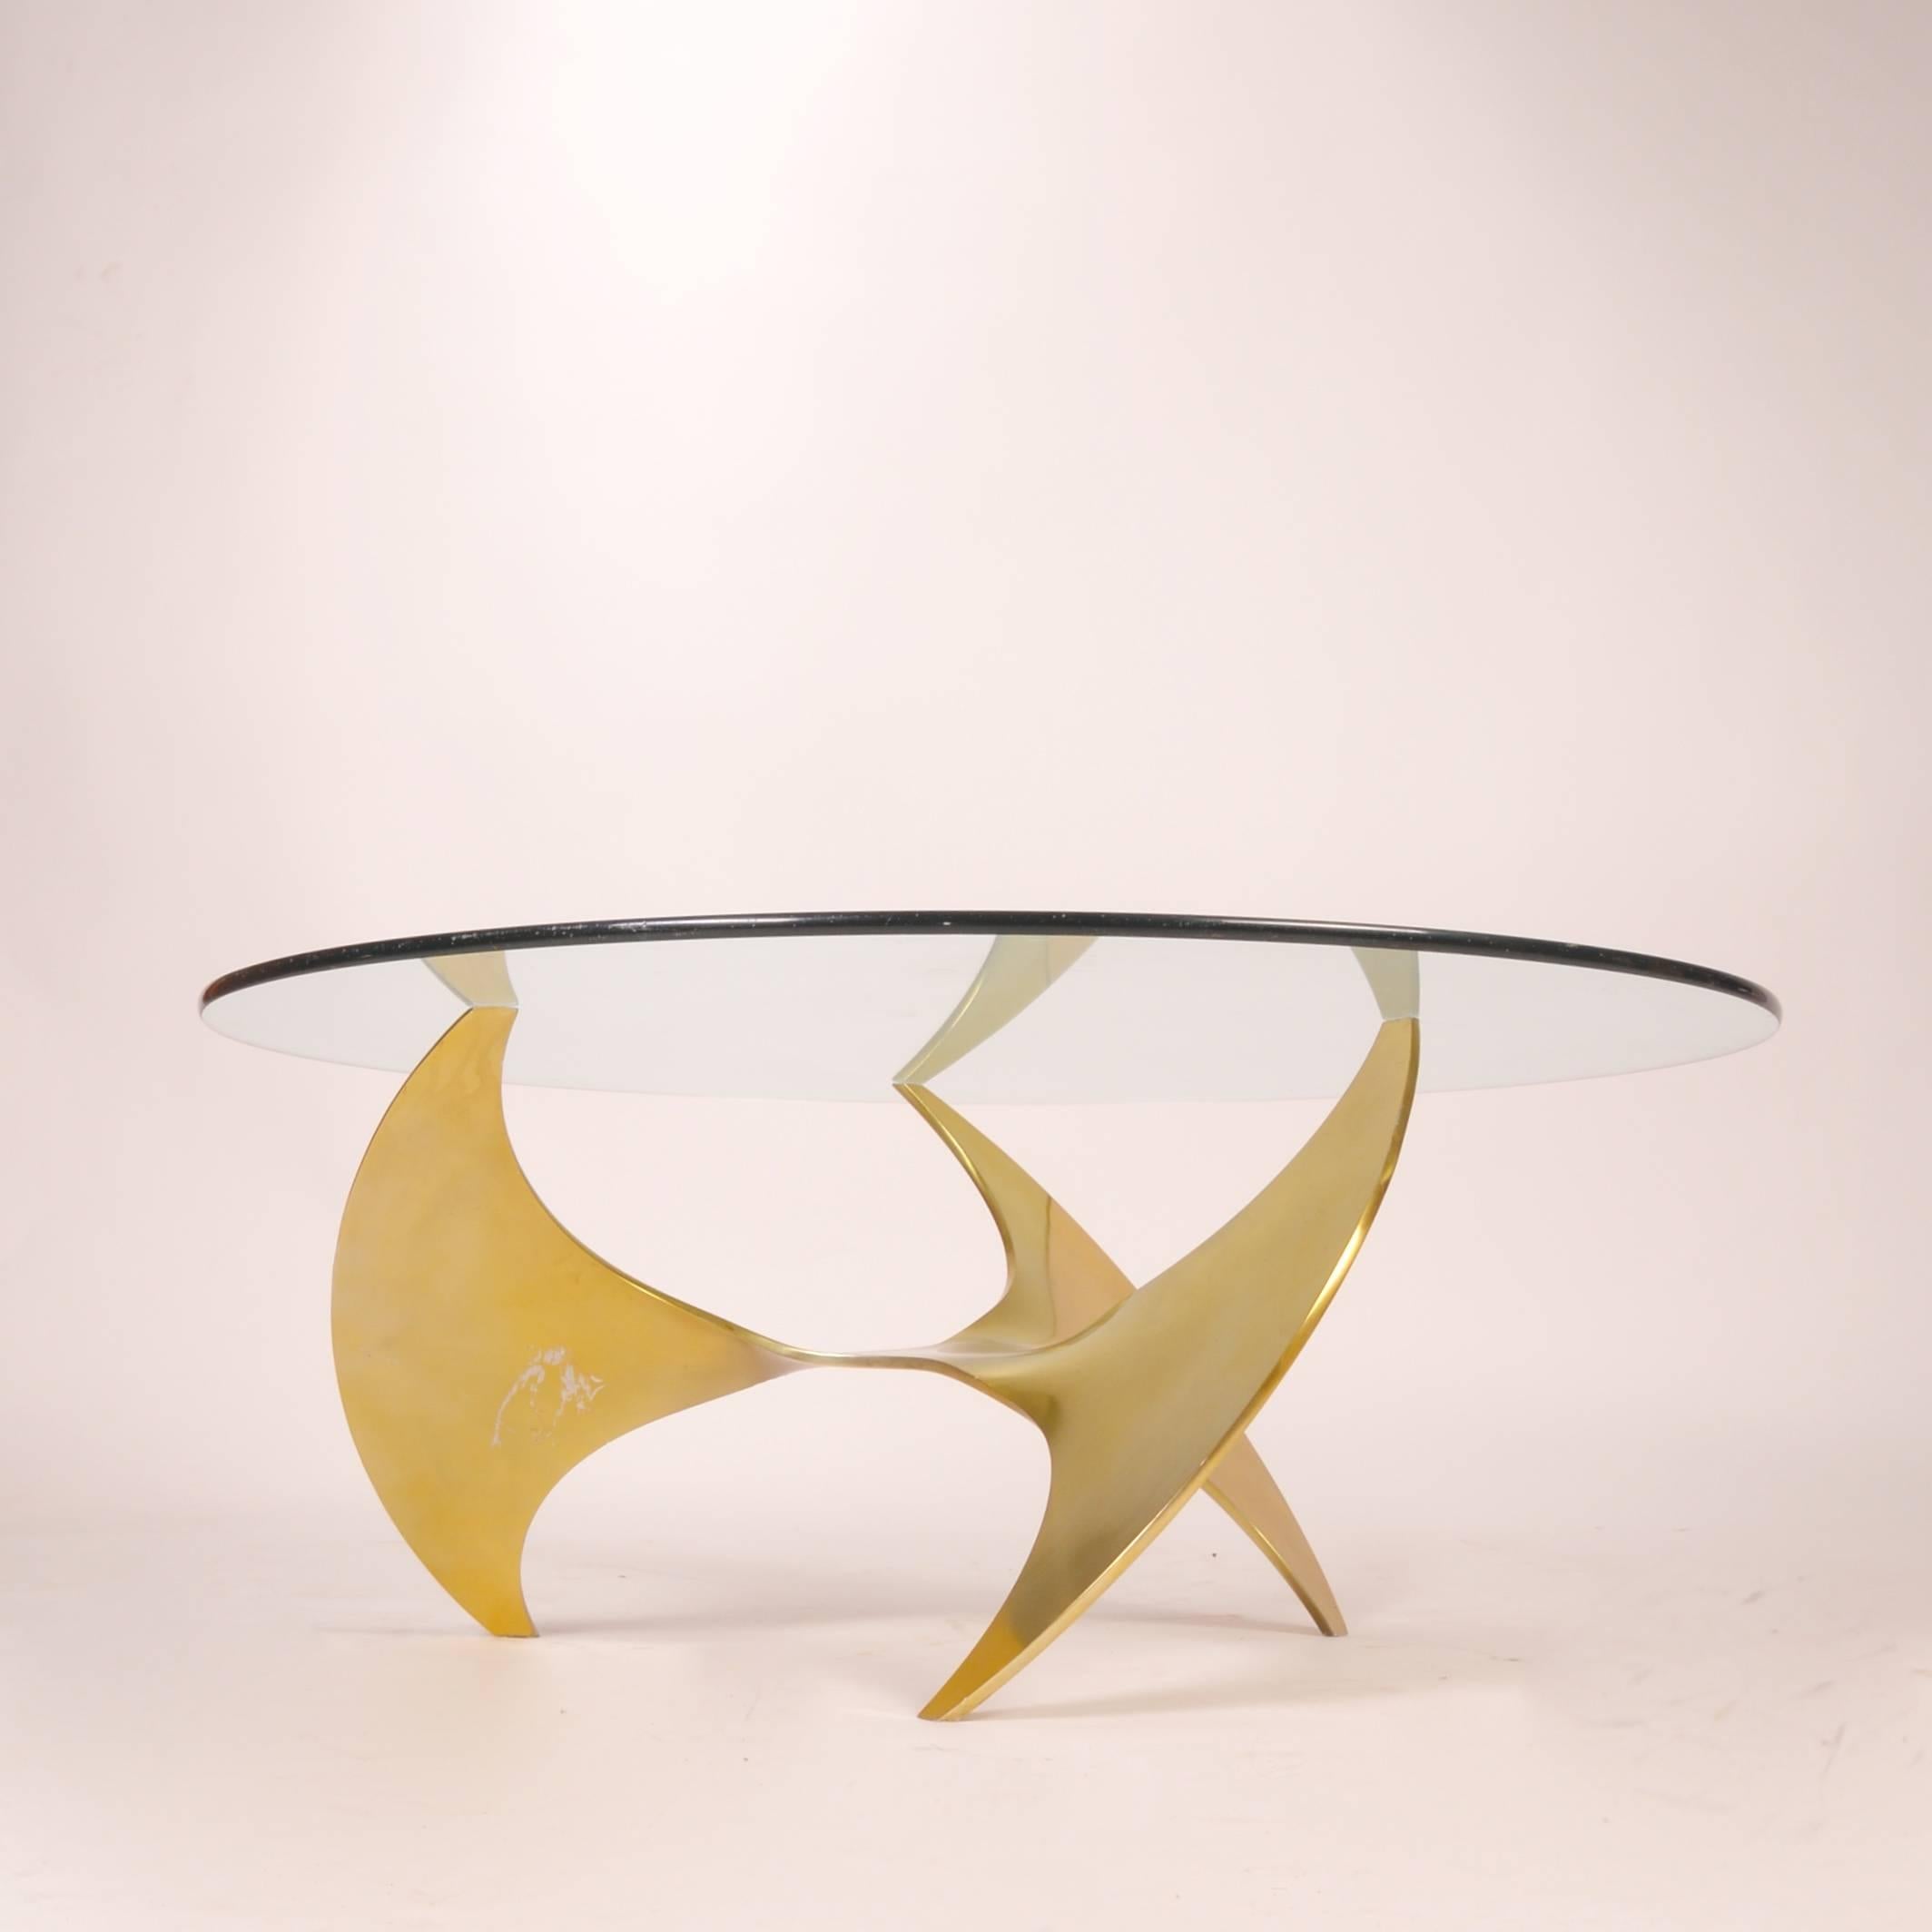 Brass and Glass propeller coffee table by Knut Hesterberg for Ronald Schmitt.  